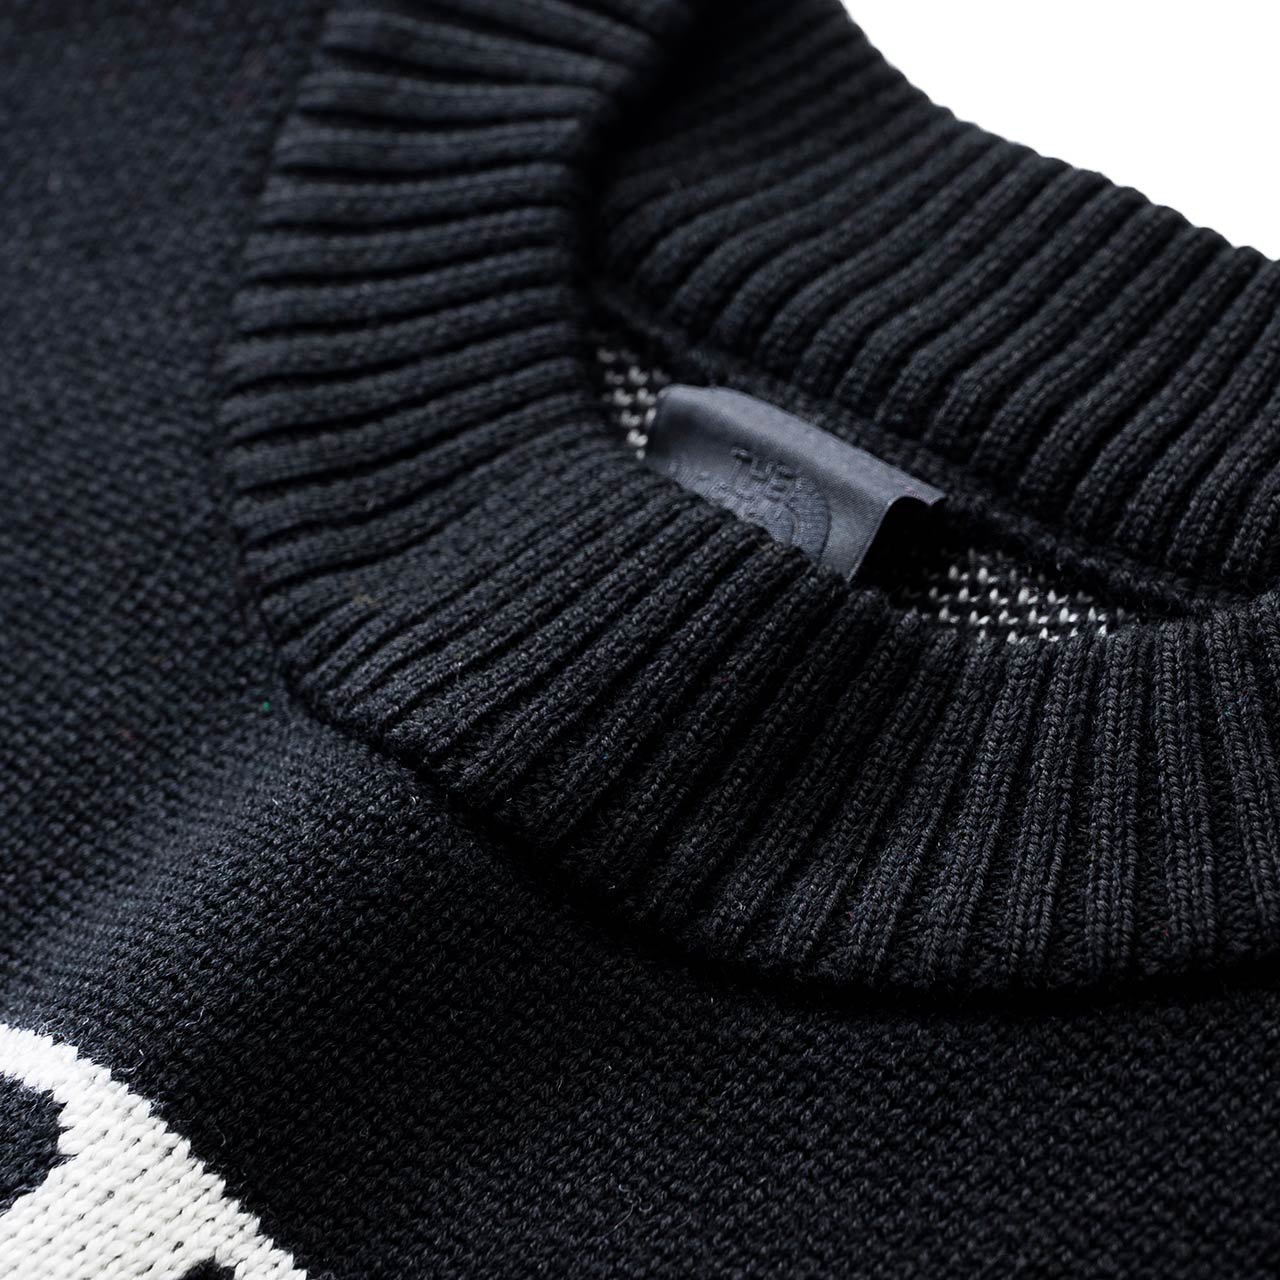 the north face black series steep tech knit top (black) - nf0a4qy3jk31 - a.plus - Image - 5